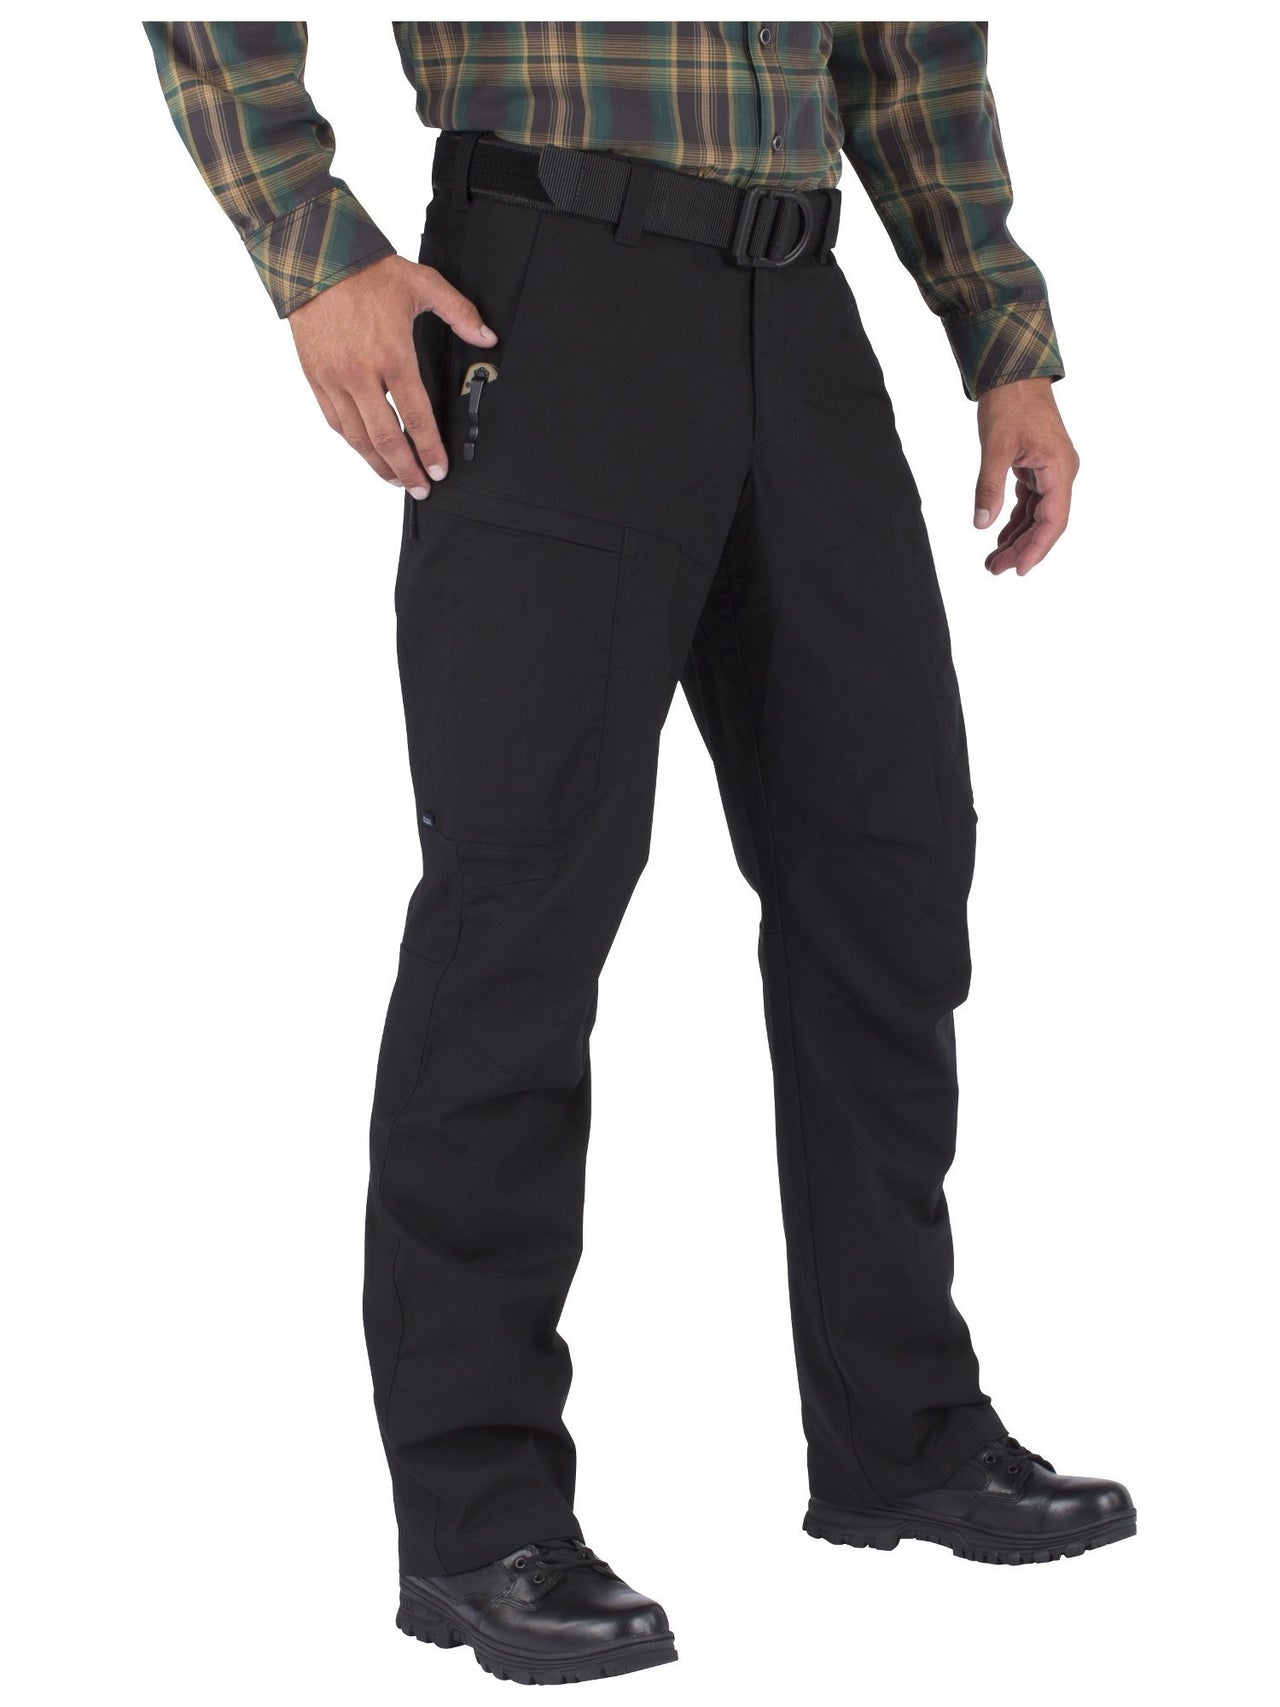 5.11 Tactical Apex Pants - Black - TacSource